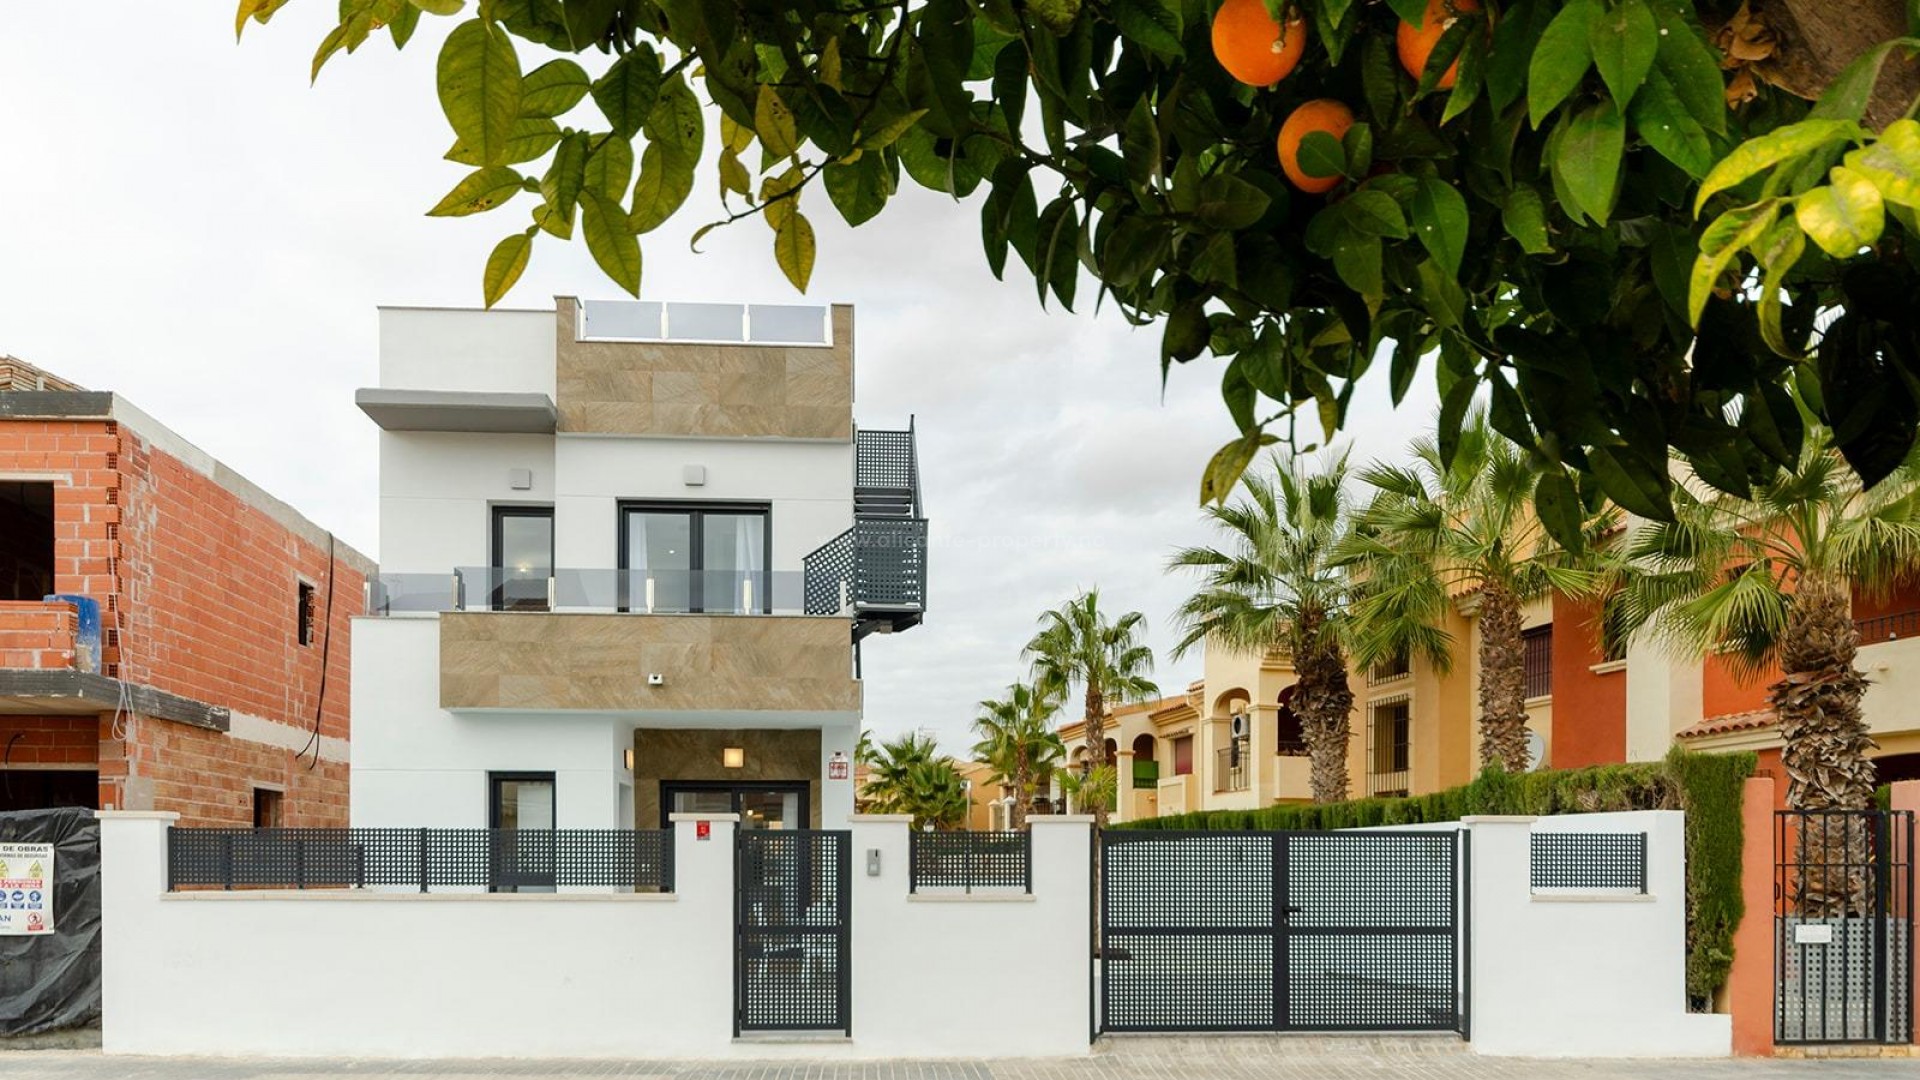 Nye villaer/hus i Torreta, Torrevieja, 3 soverom, 3 bad, terrasse, privat solarium, åpen kjøkkenløsning med stue, hage med privat basseng og parkering .